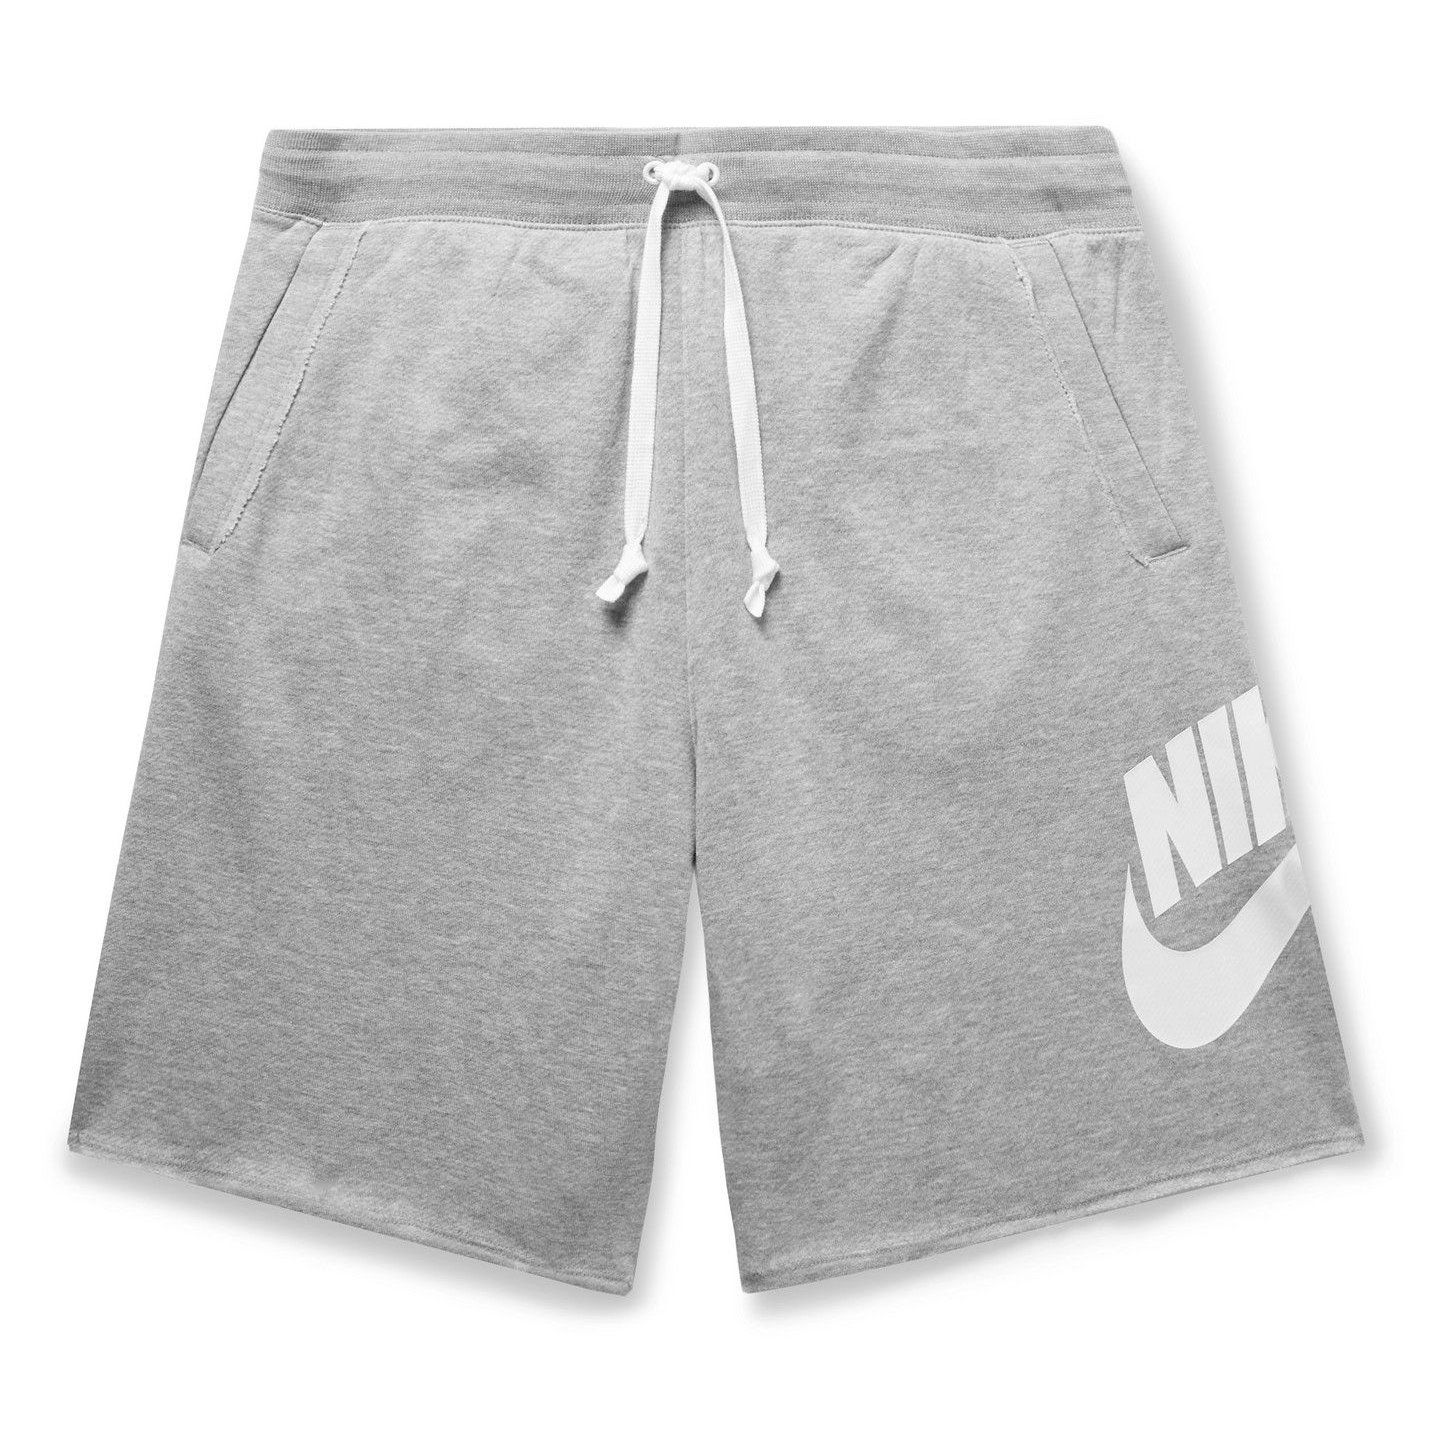 55% OFF the Nike Alumni Fleece Shorts 